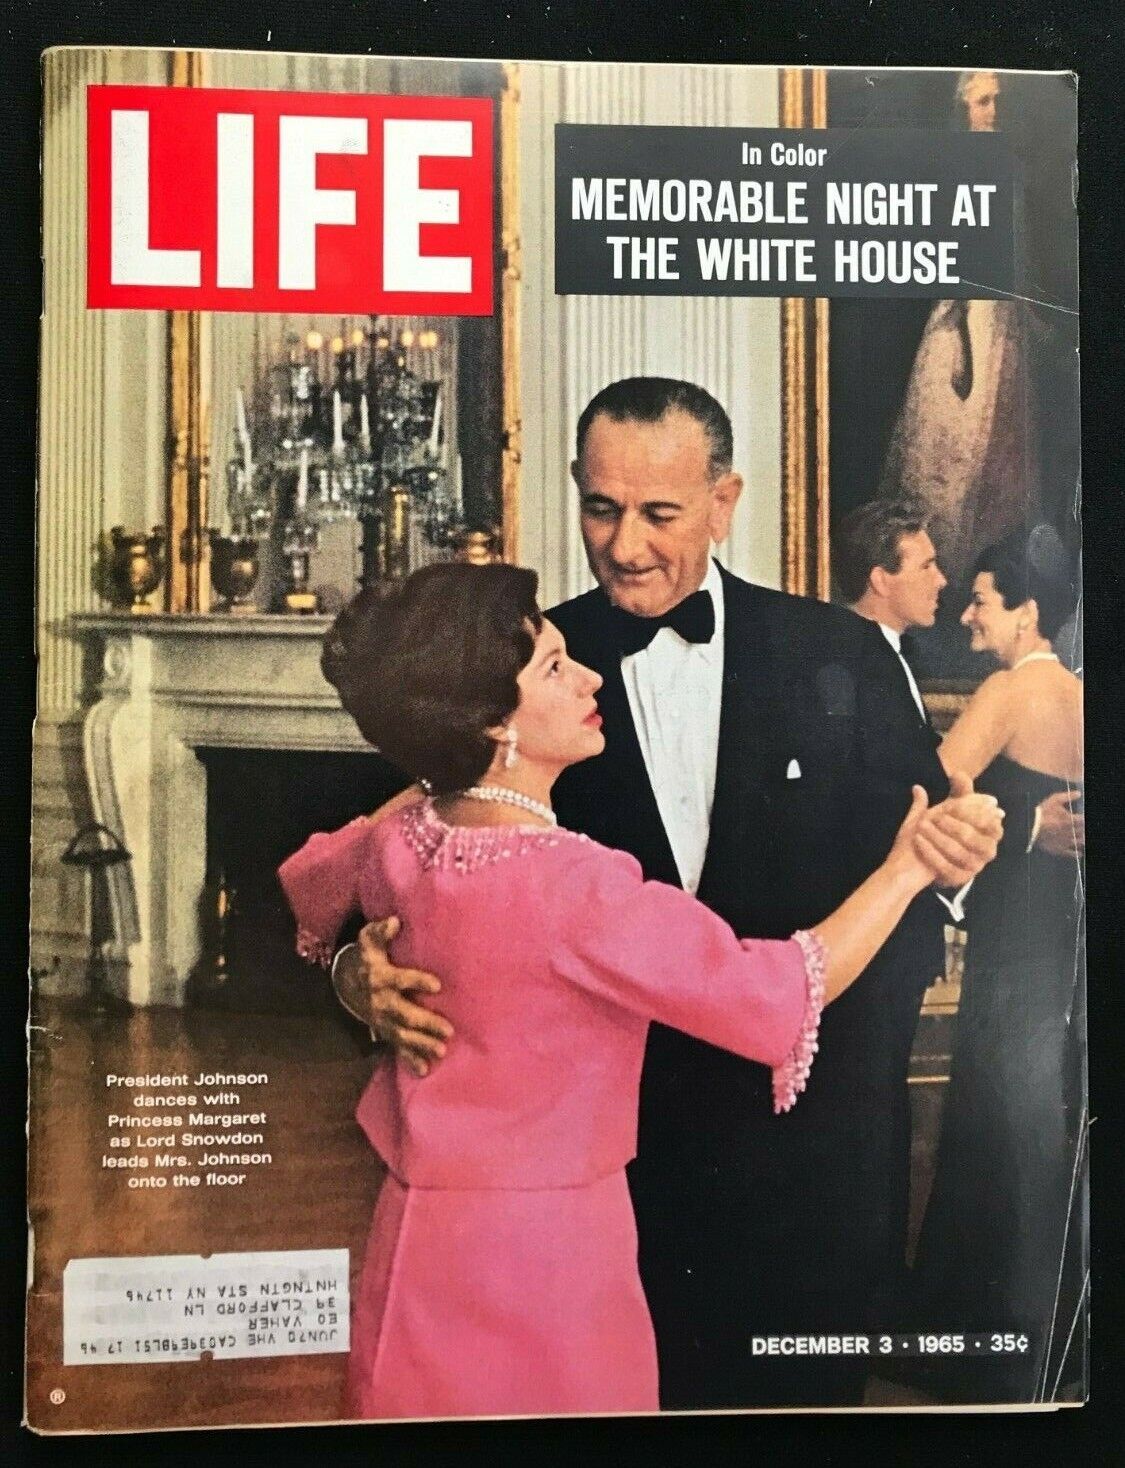 LIFE MAGAZINE - Dec 3 1965 - LBJ WHITEHOUSE / Dmitri Kessel / Archibald MacLeish